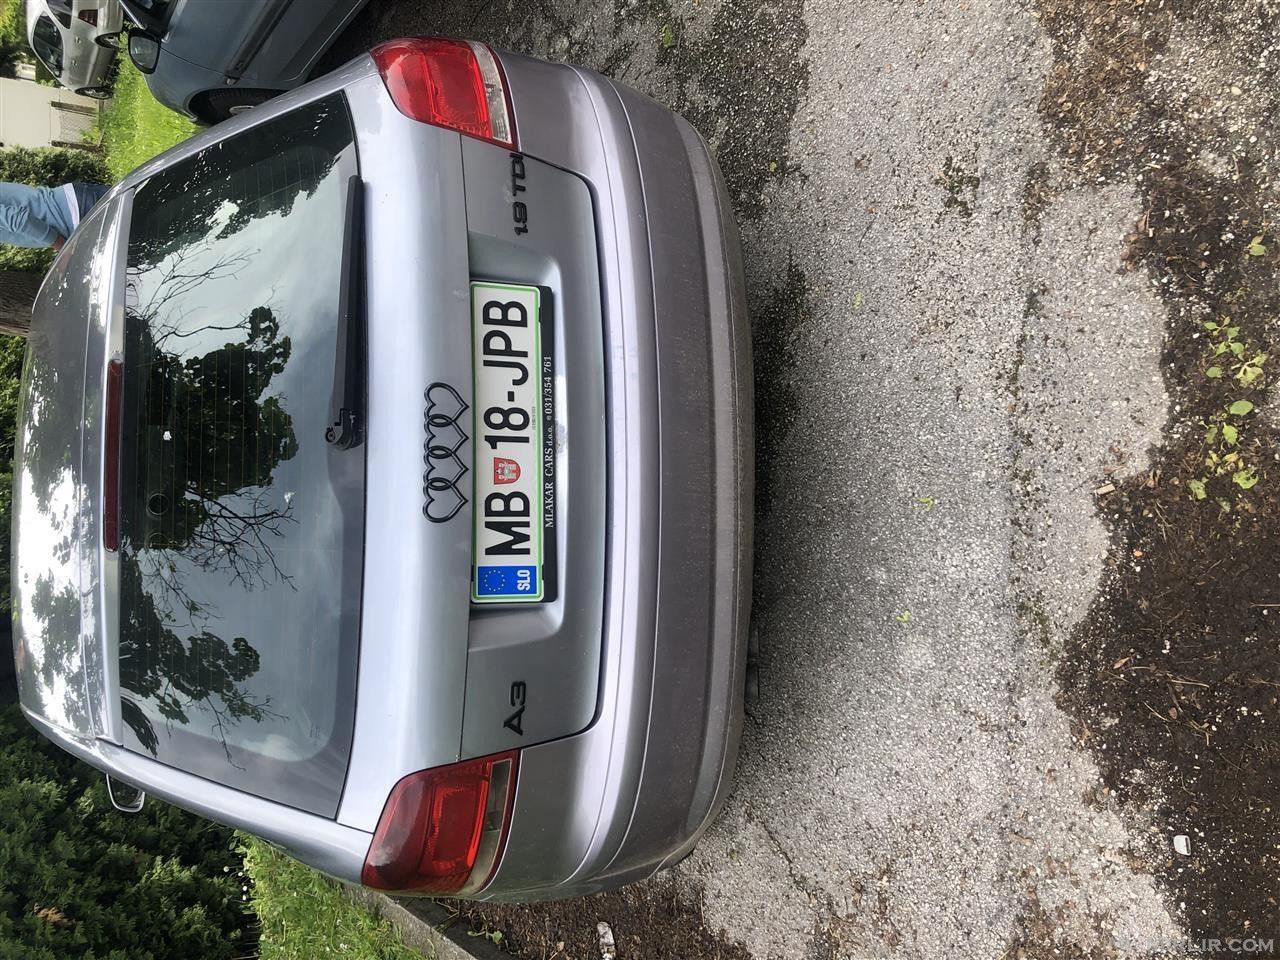 Audi A 3